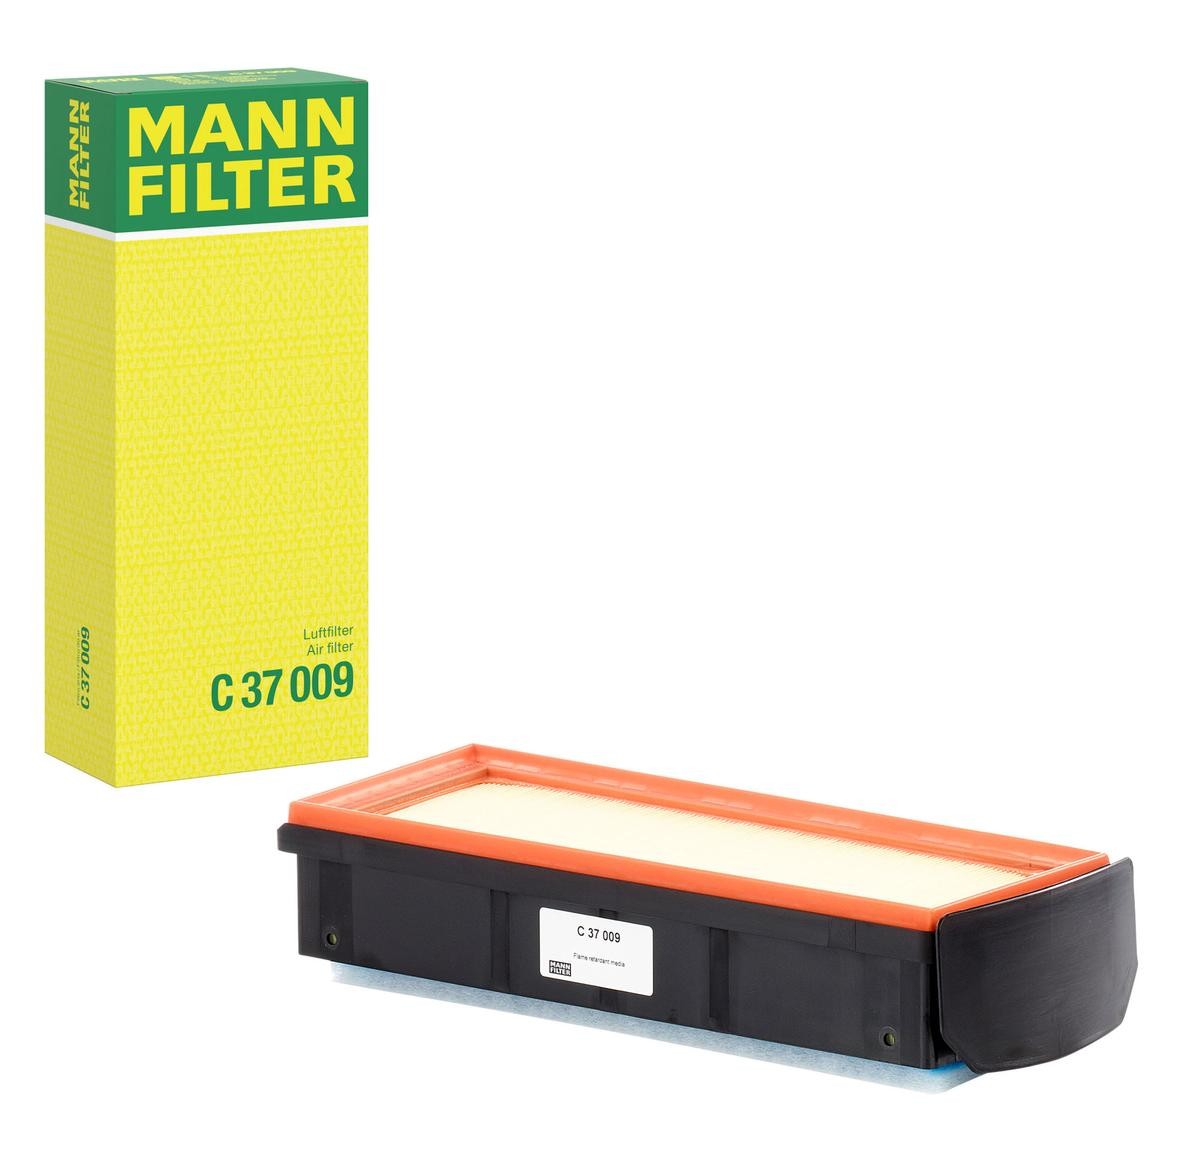 C37009 Air filter C 37 009 MANN-FILTER 78mm, 149mm, 367mm, Filter Insert